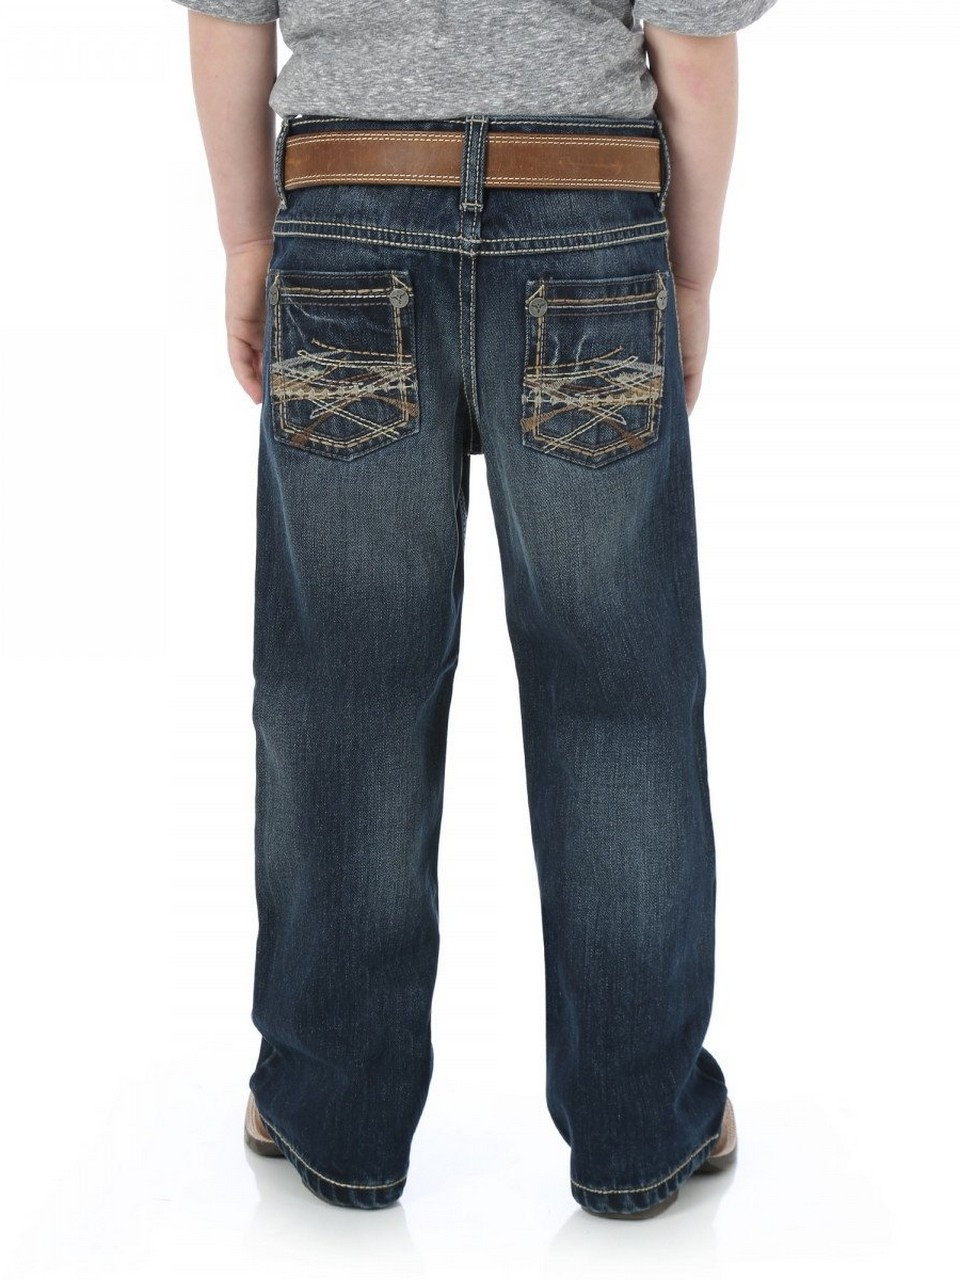 wrangler 20x jeans style 42